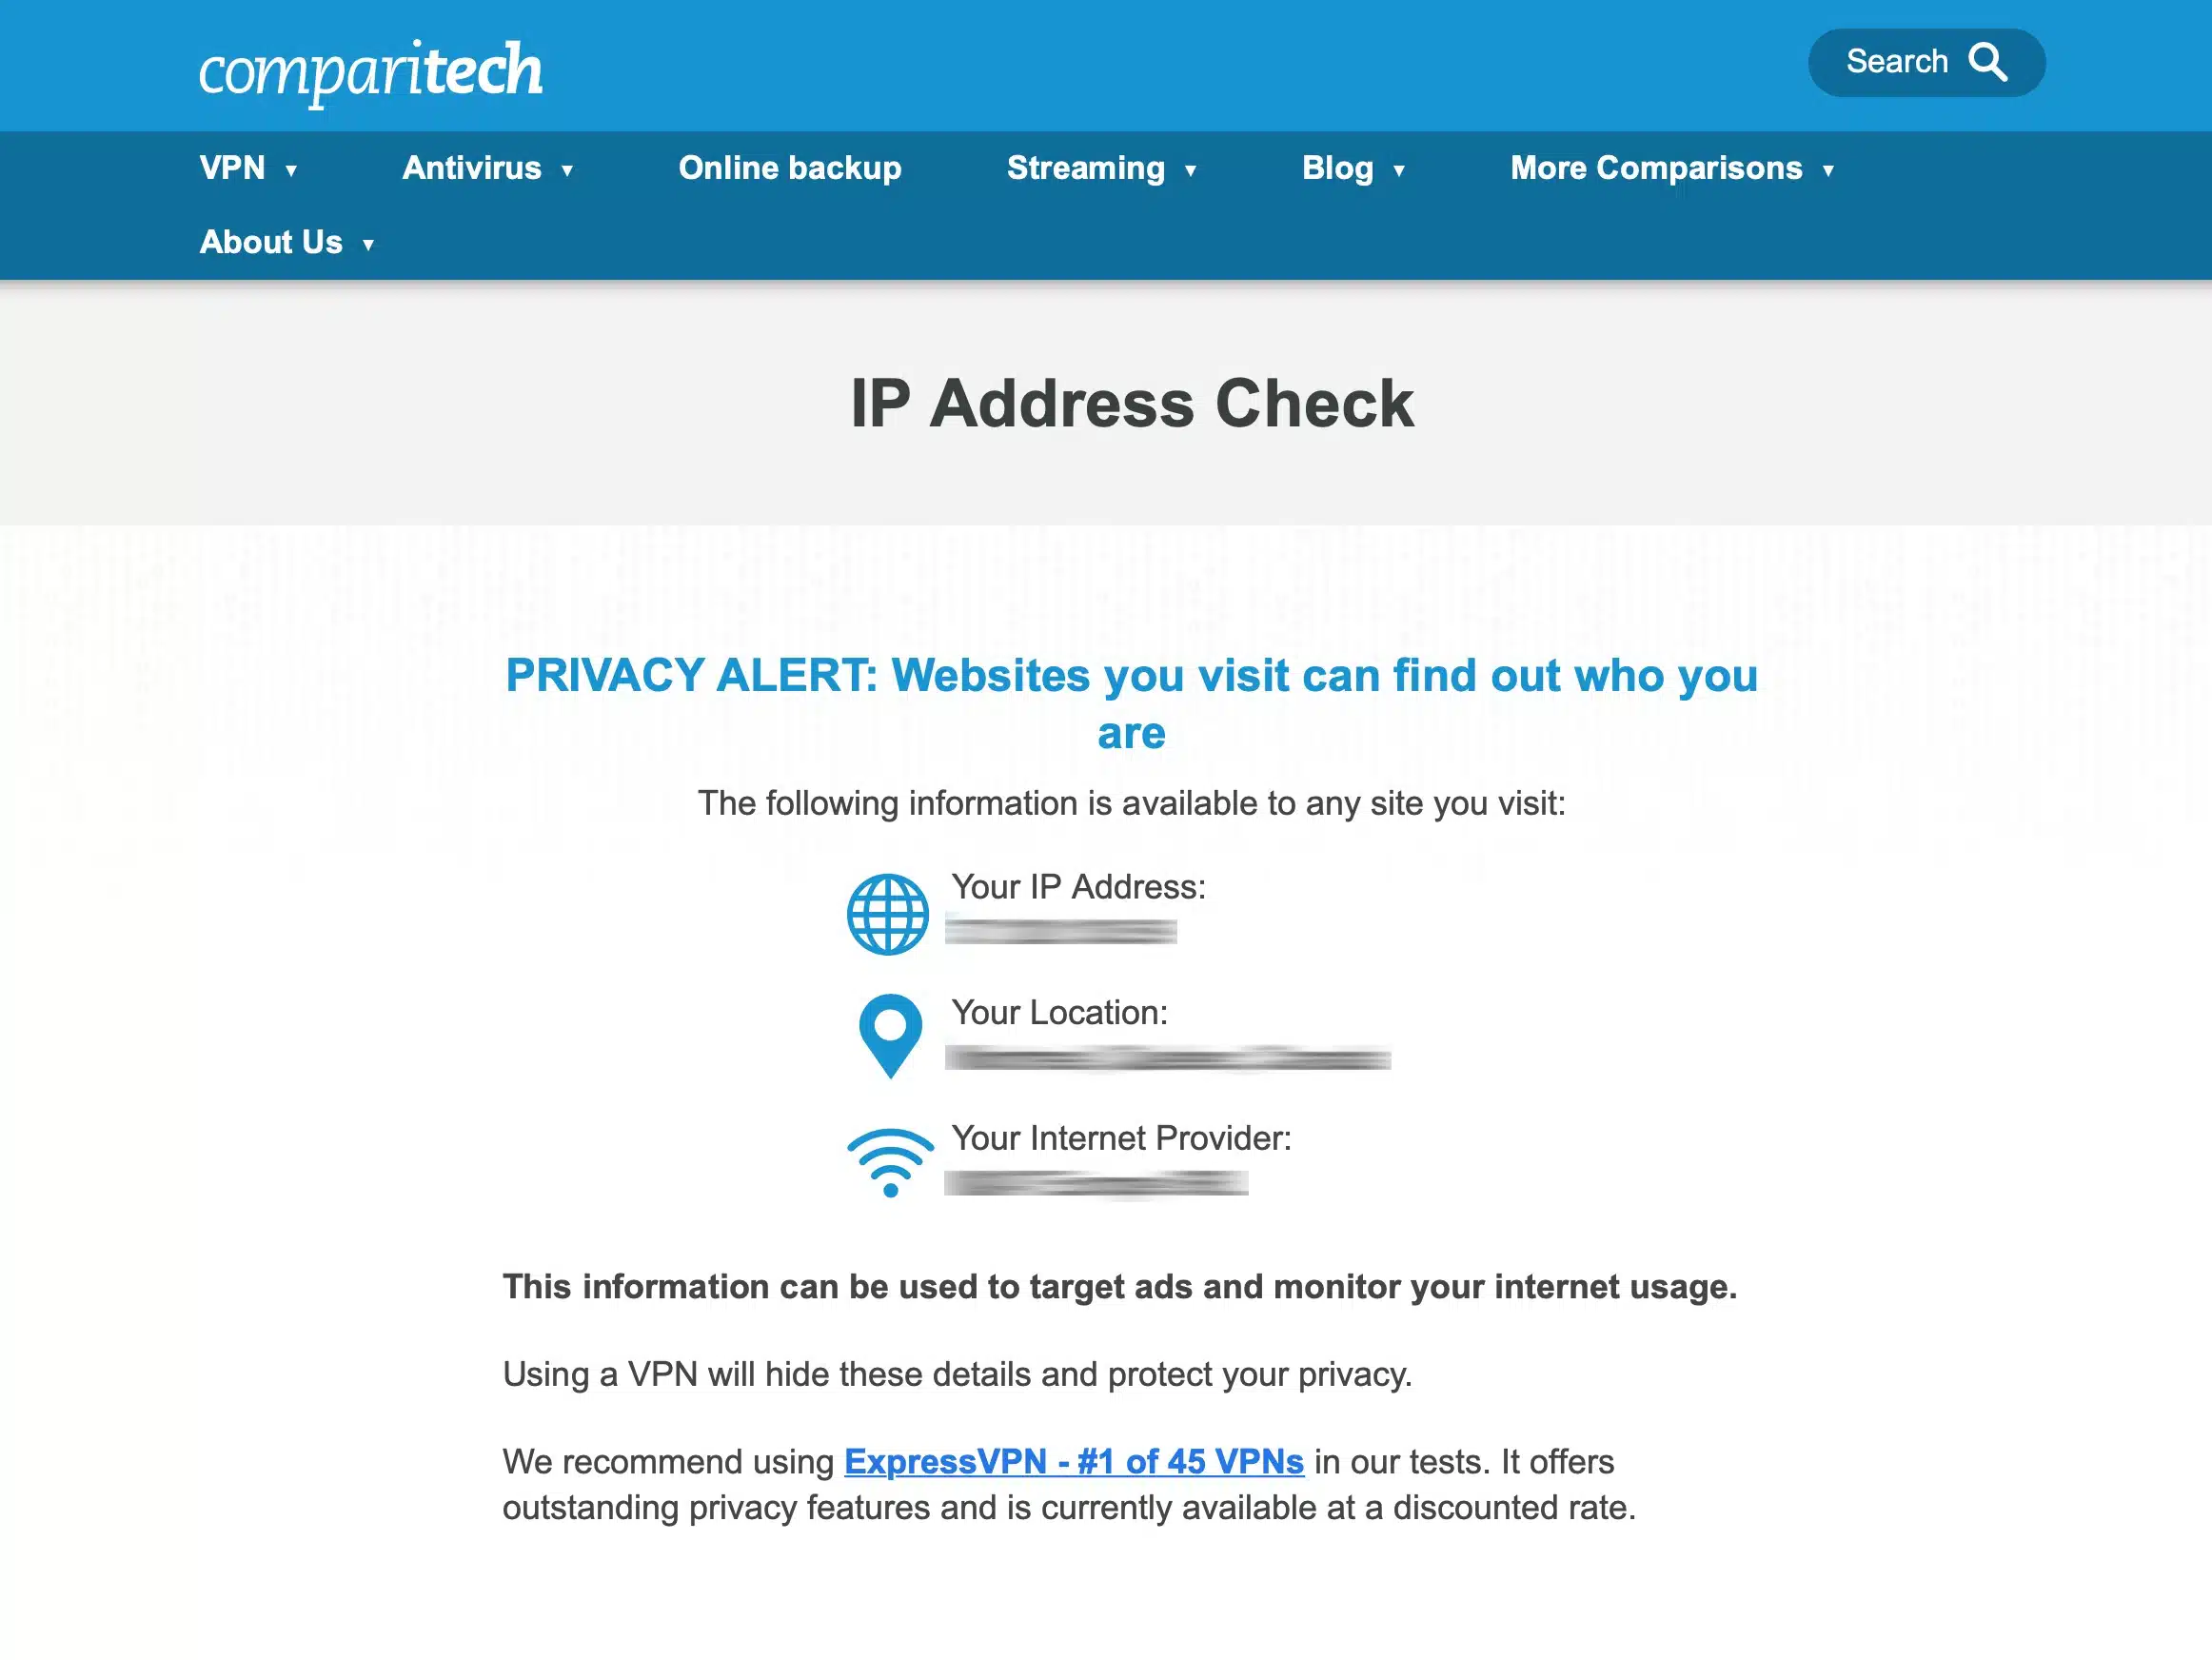 OPNsense - OpenVPNClient - Comparitech IP Check